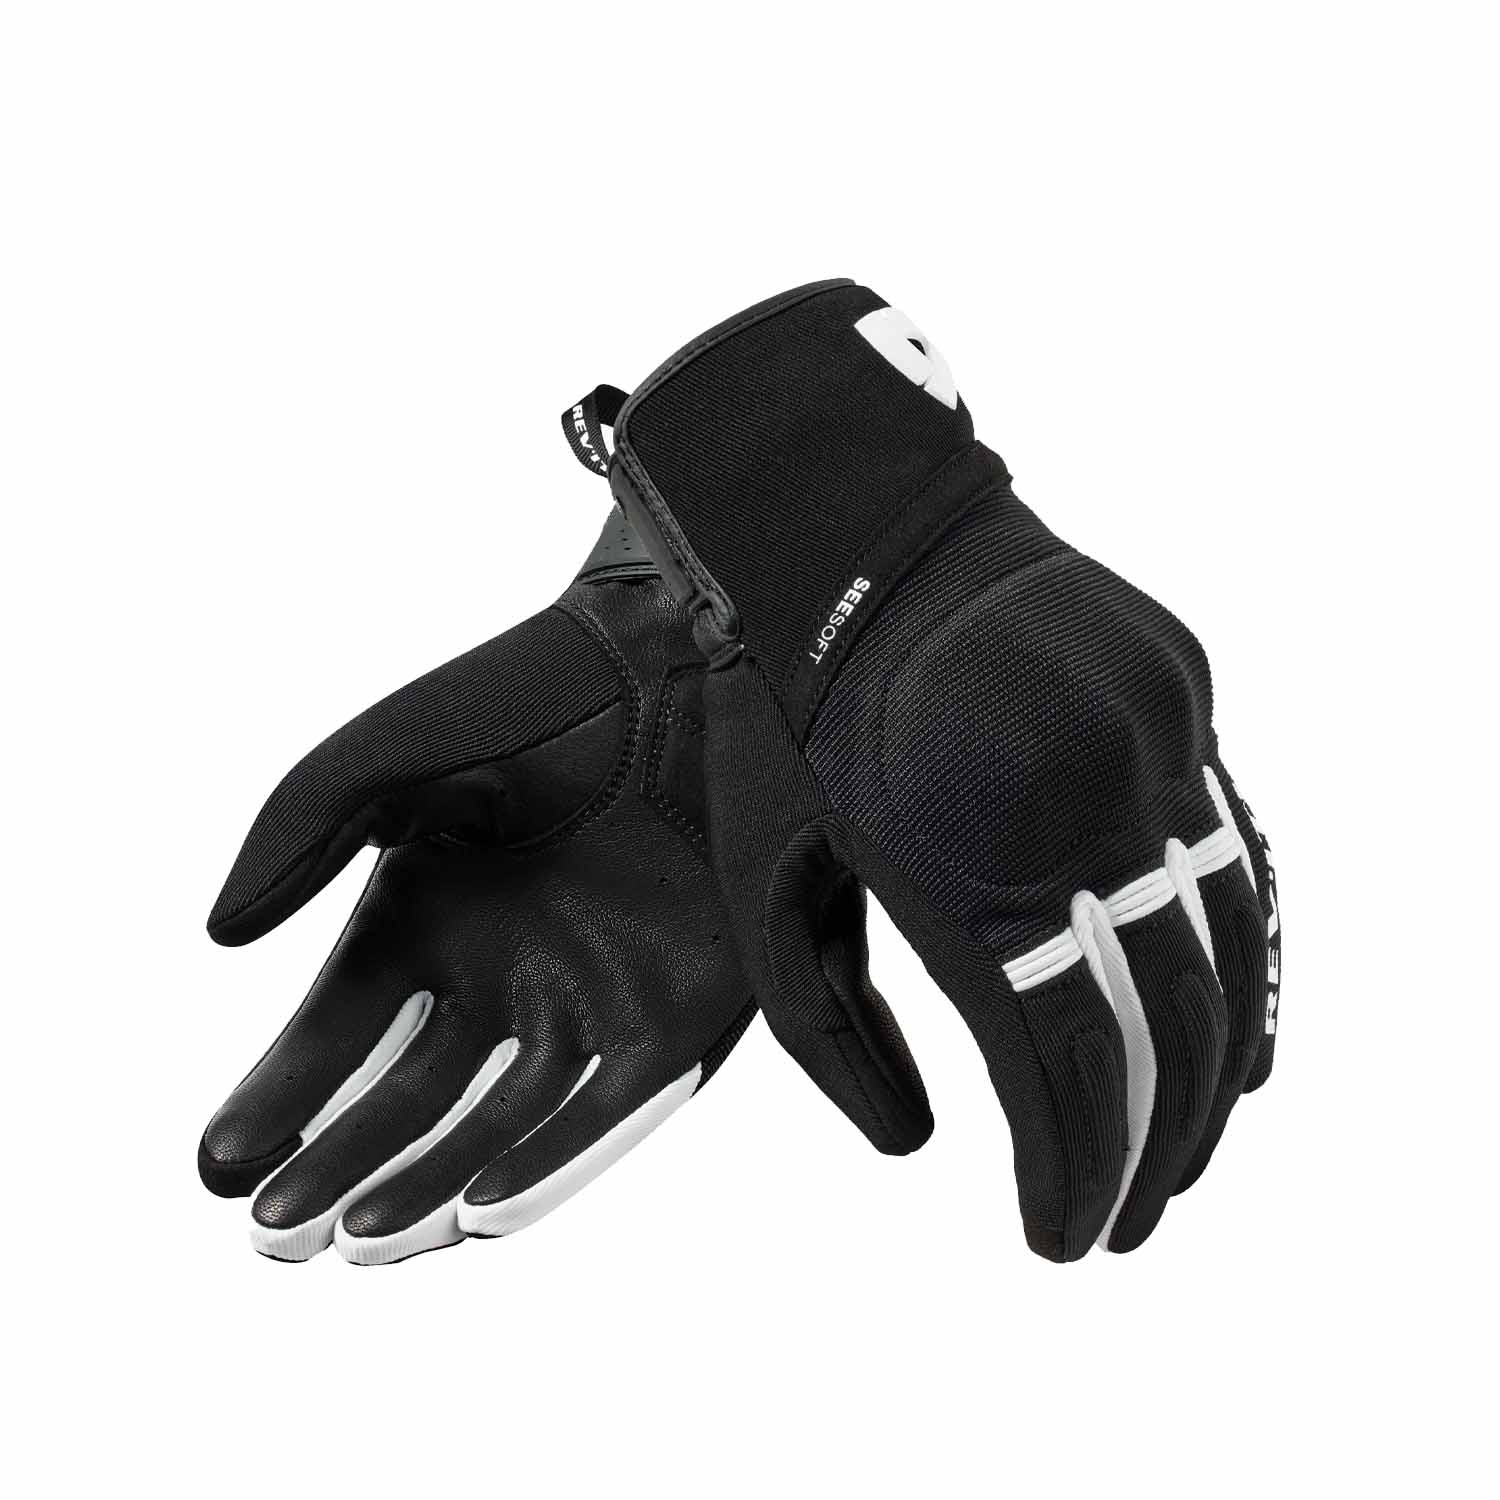 Image of REV'IT! Mosca 2 Gloves Black White Talla L